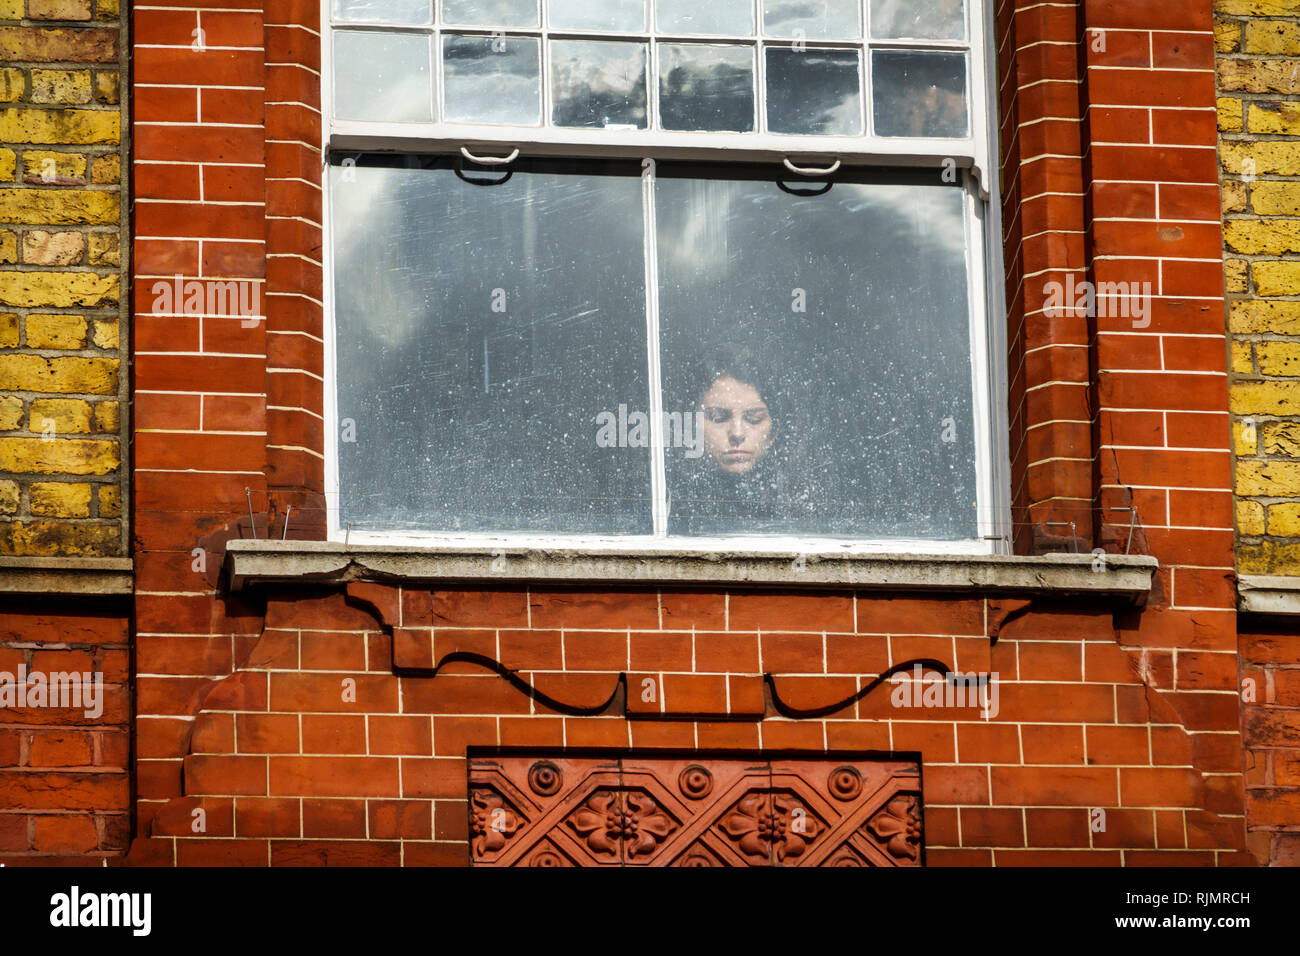 United Kingdom Great Britain England London Kensington brick building window woman looking through window with eyes closed sightseeing visitors Stock Photo